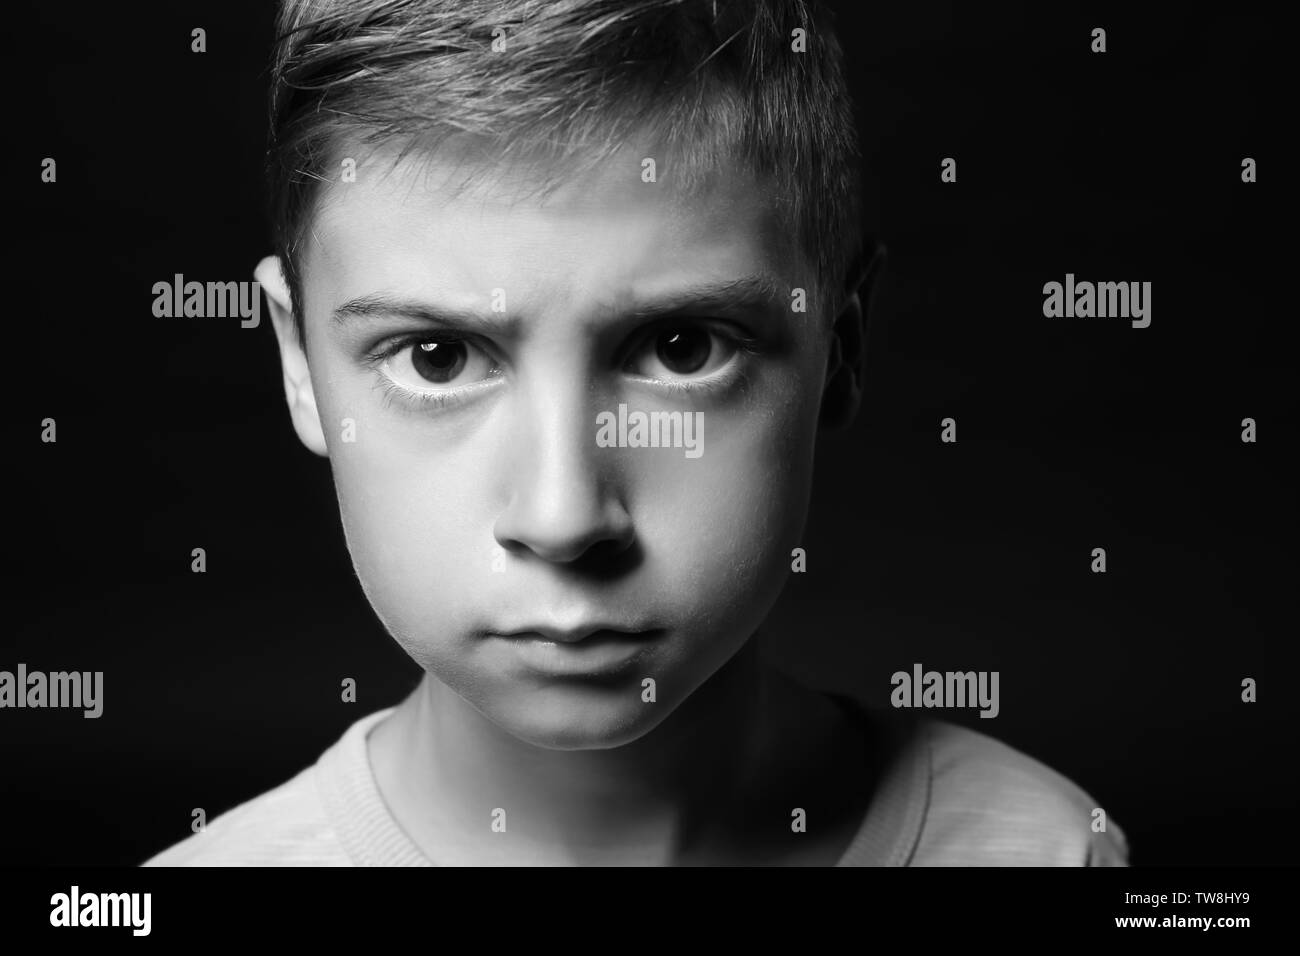 Upset little boy on dark background, black and white effect Stock Photo